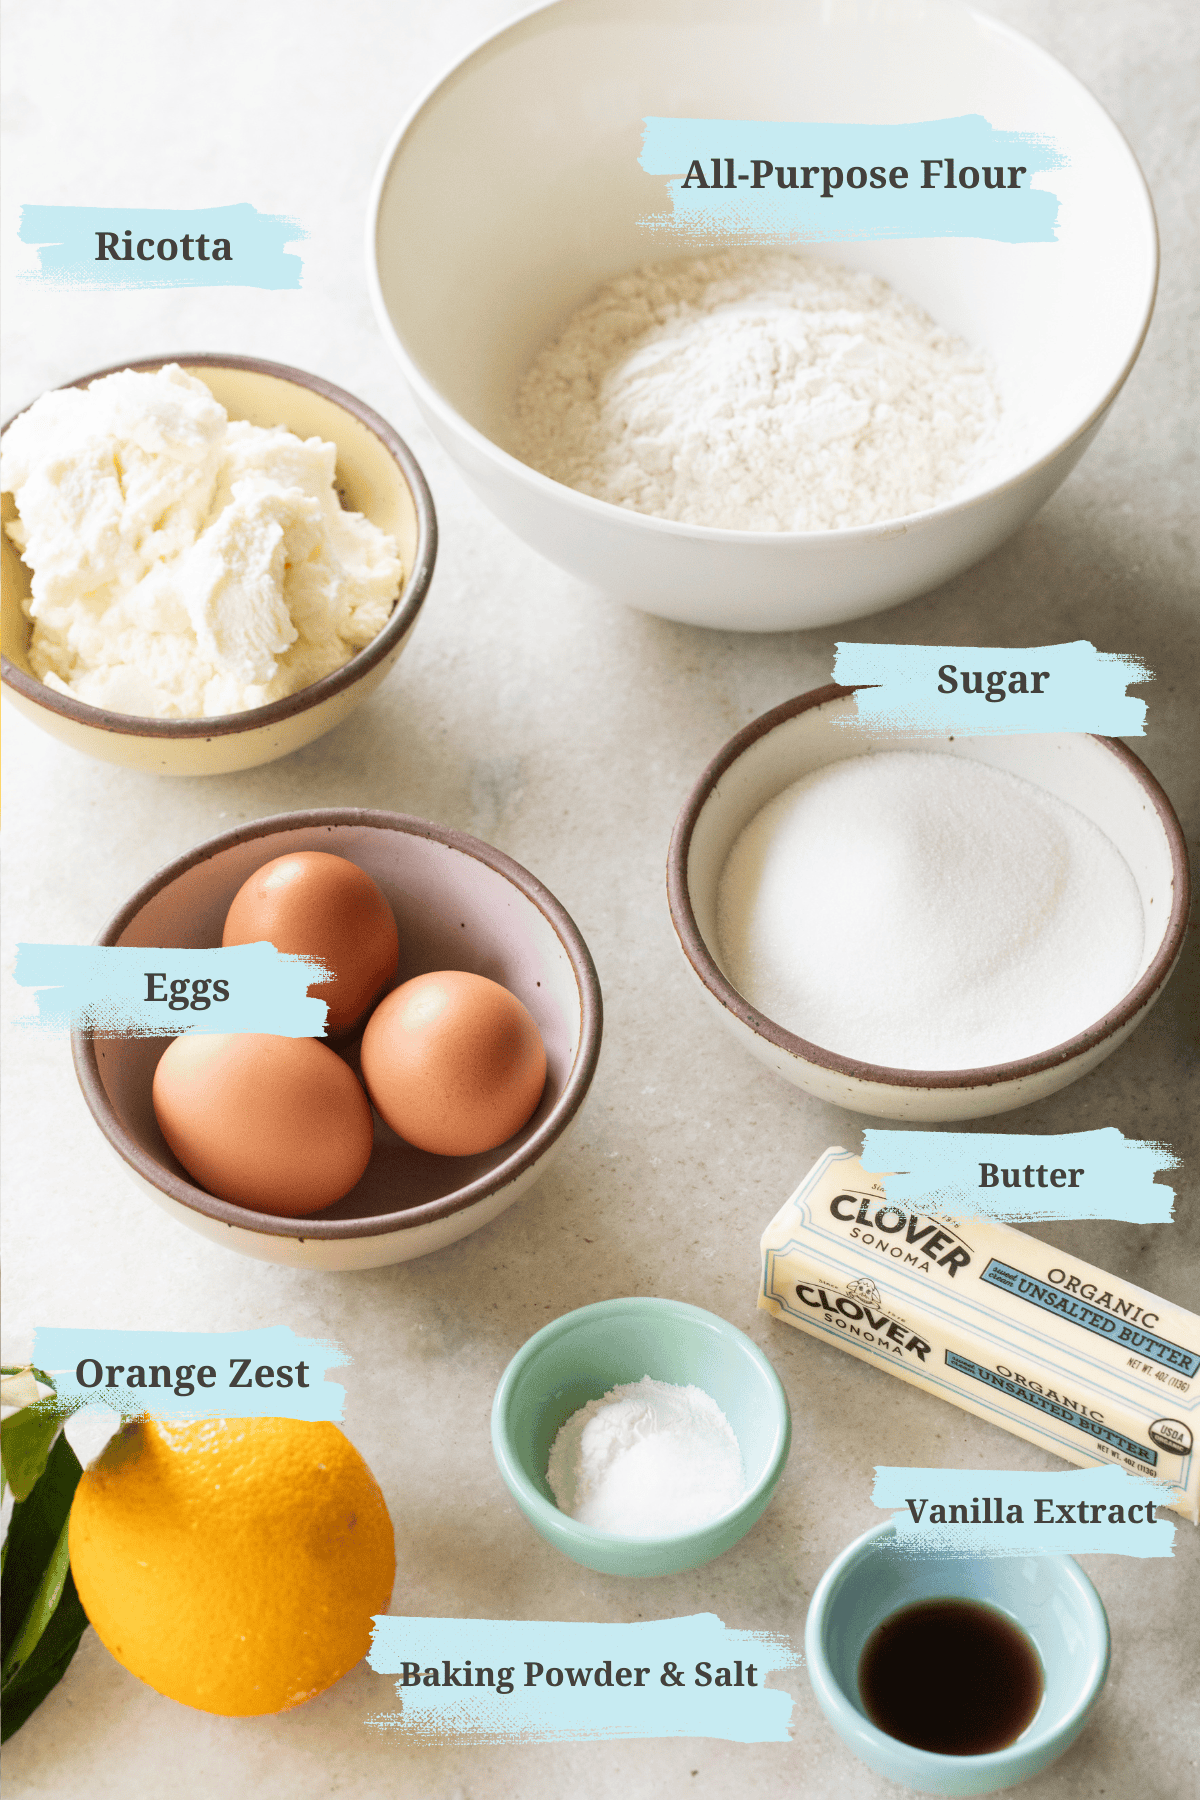 Ricotta, flour, sugar, butter, eggs, vanilla extract, orange zest, baking powder and salt in small bowls.